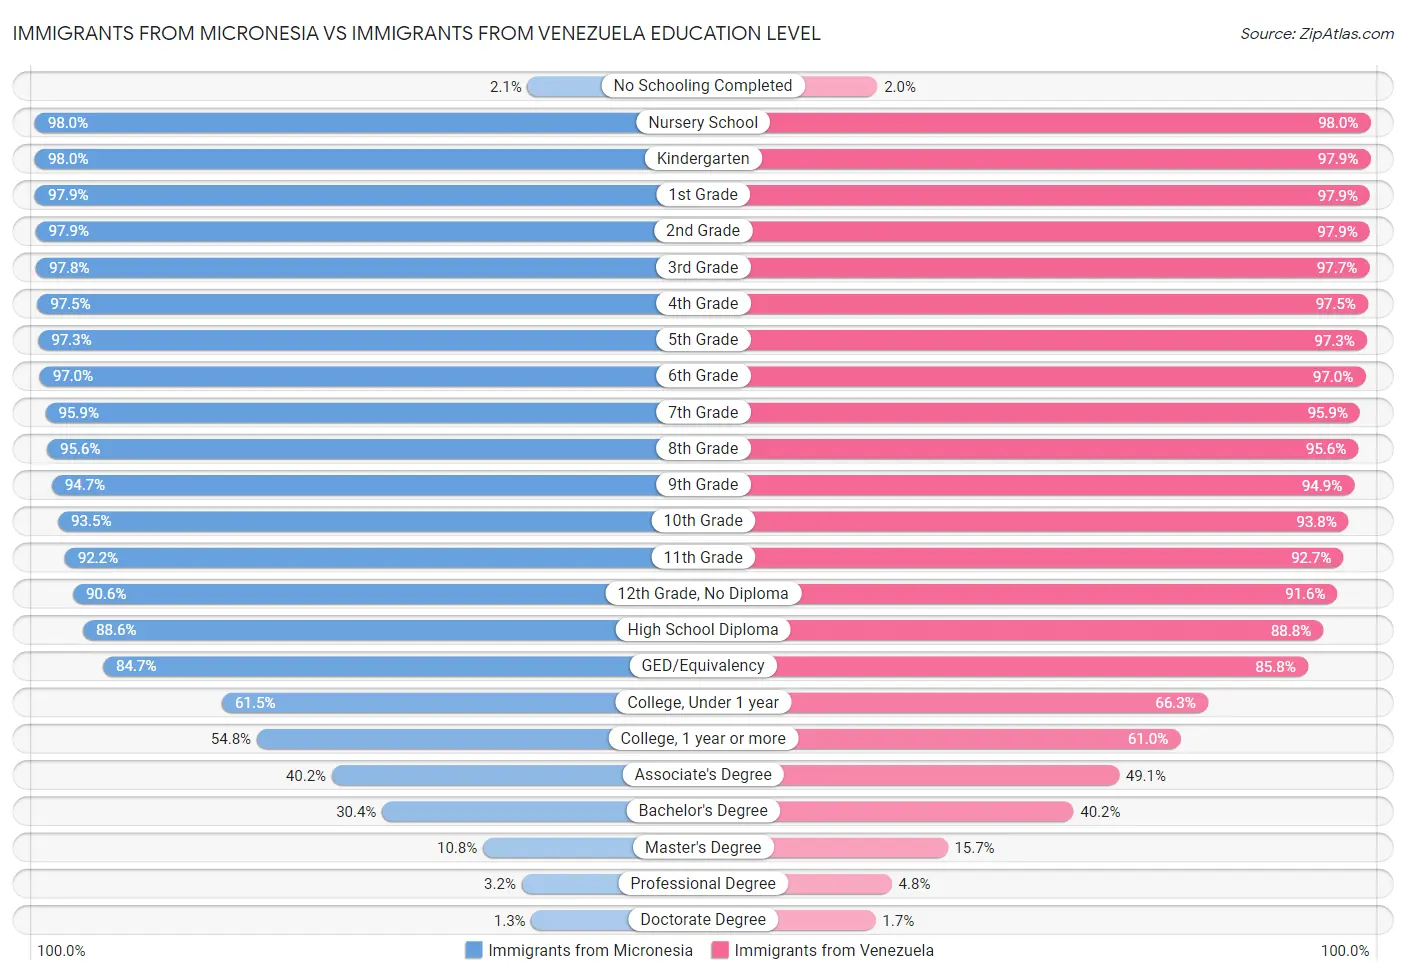 Immigrants from Micronesia vs Immigrants from Venezuela Education Level